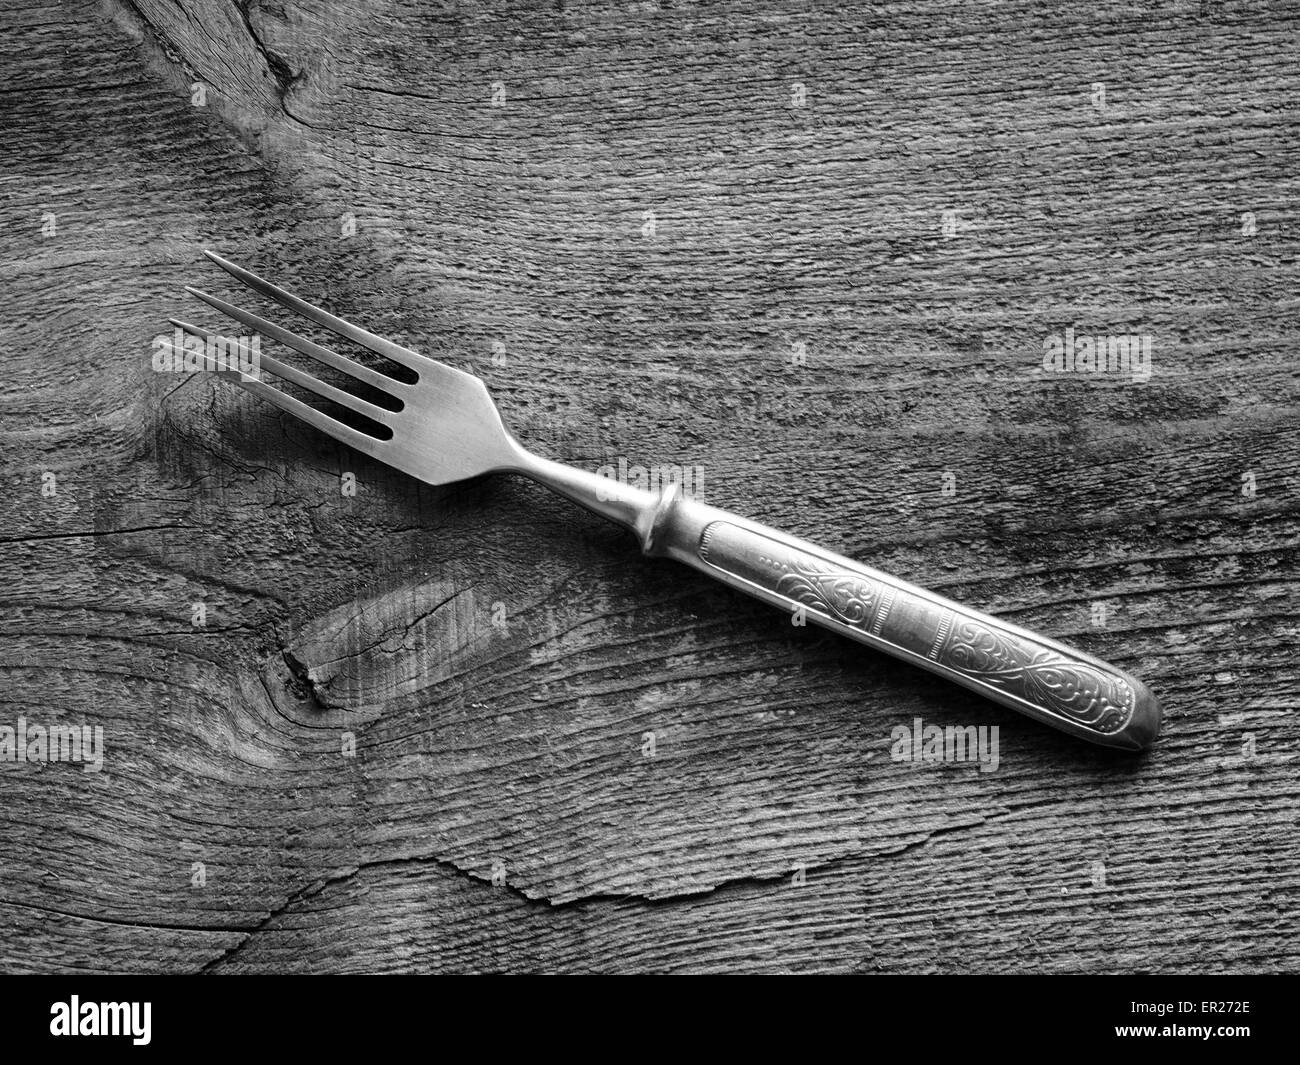 May 24, 2015 - Dining fork on raw wooden background. Grunge style. (Credit Image: © Igor Golovniov/ZUMA Wire/ZUMAPRESS.com) Stock Photo